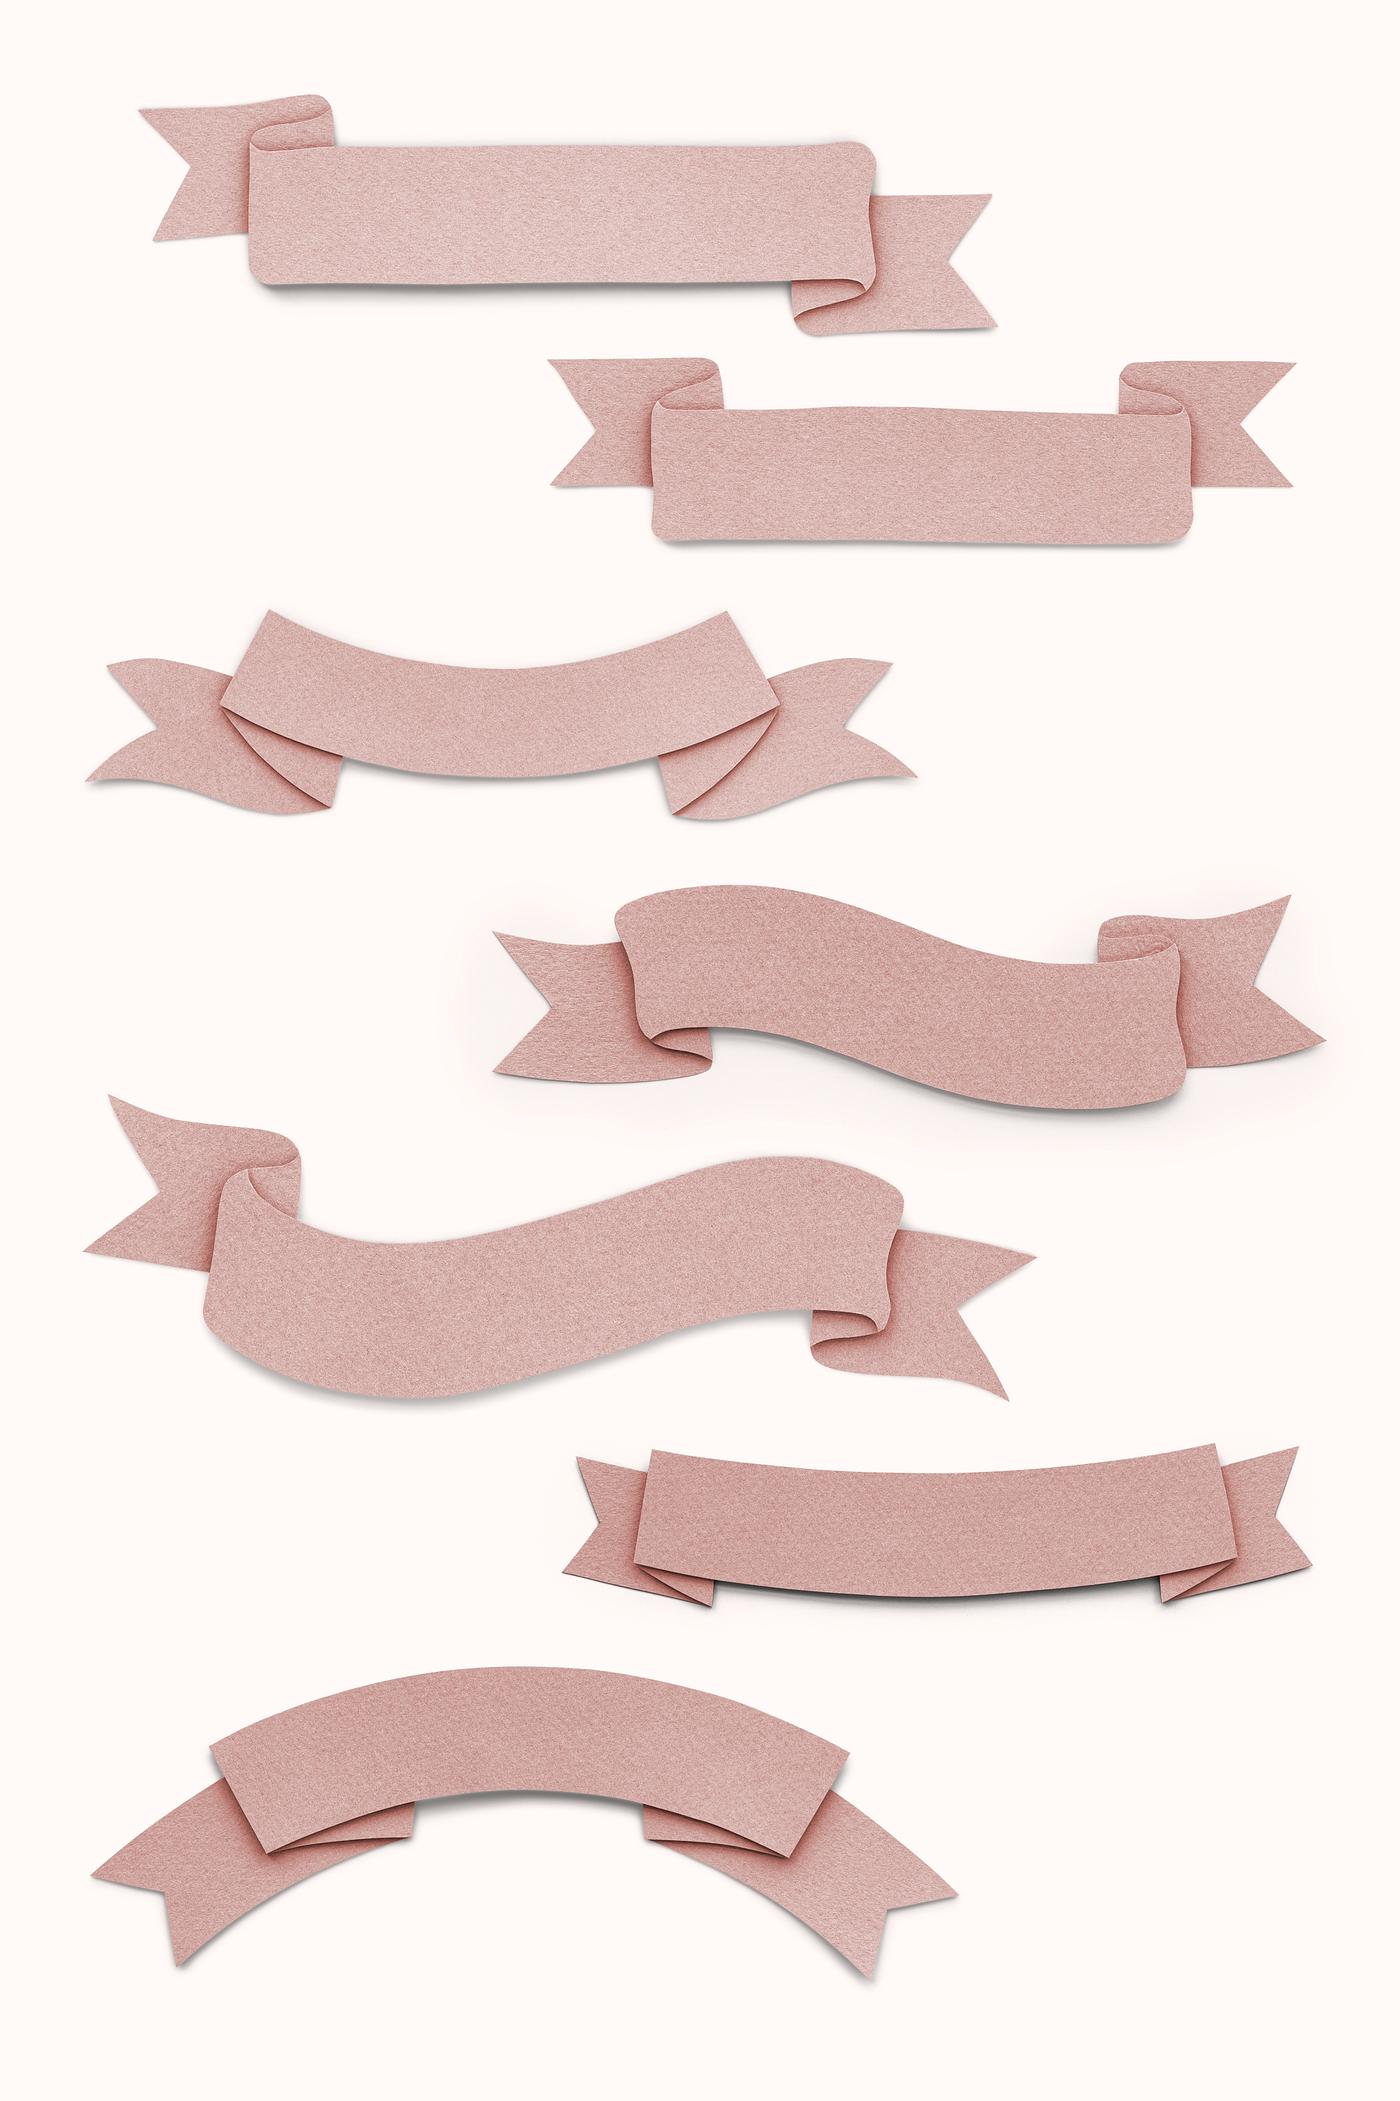 Download Paper craft ribbon set | Royalty free stock psd mockup - 1202535